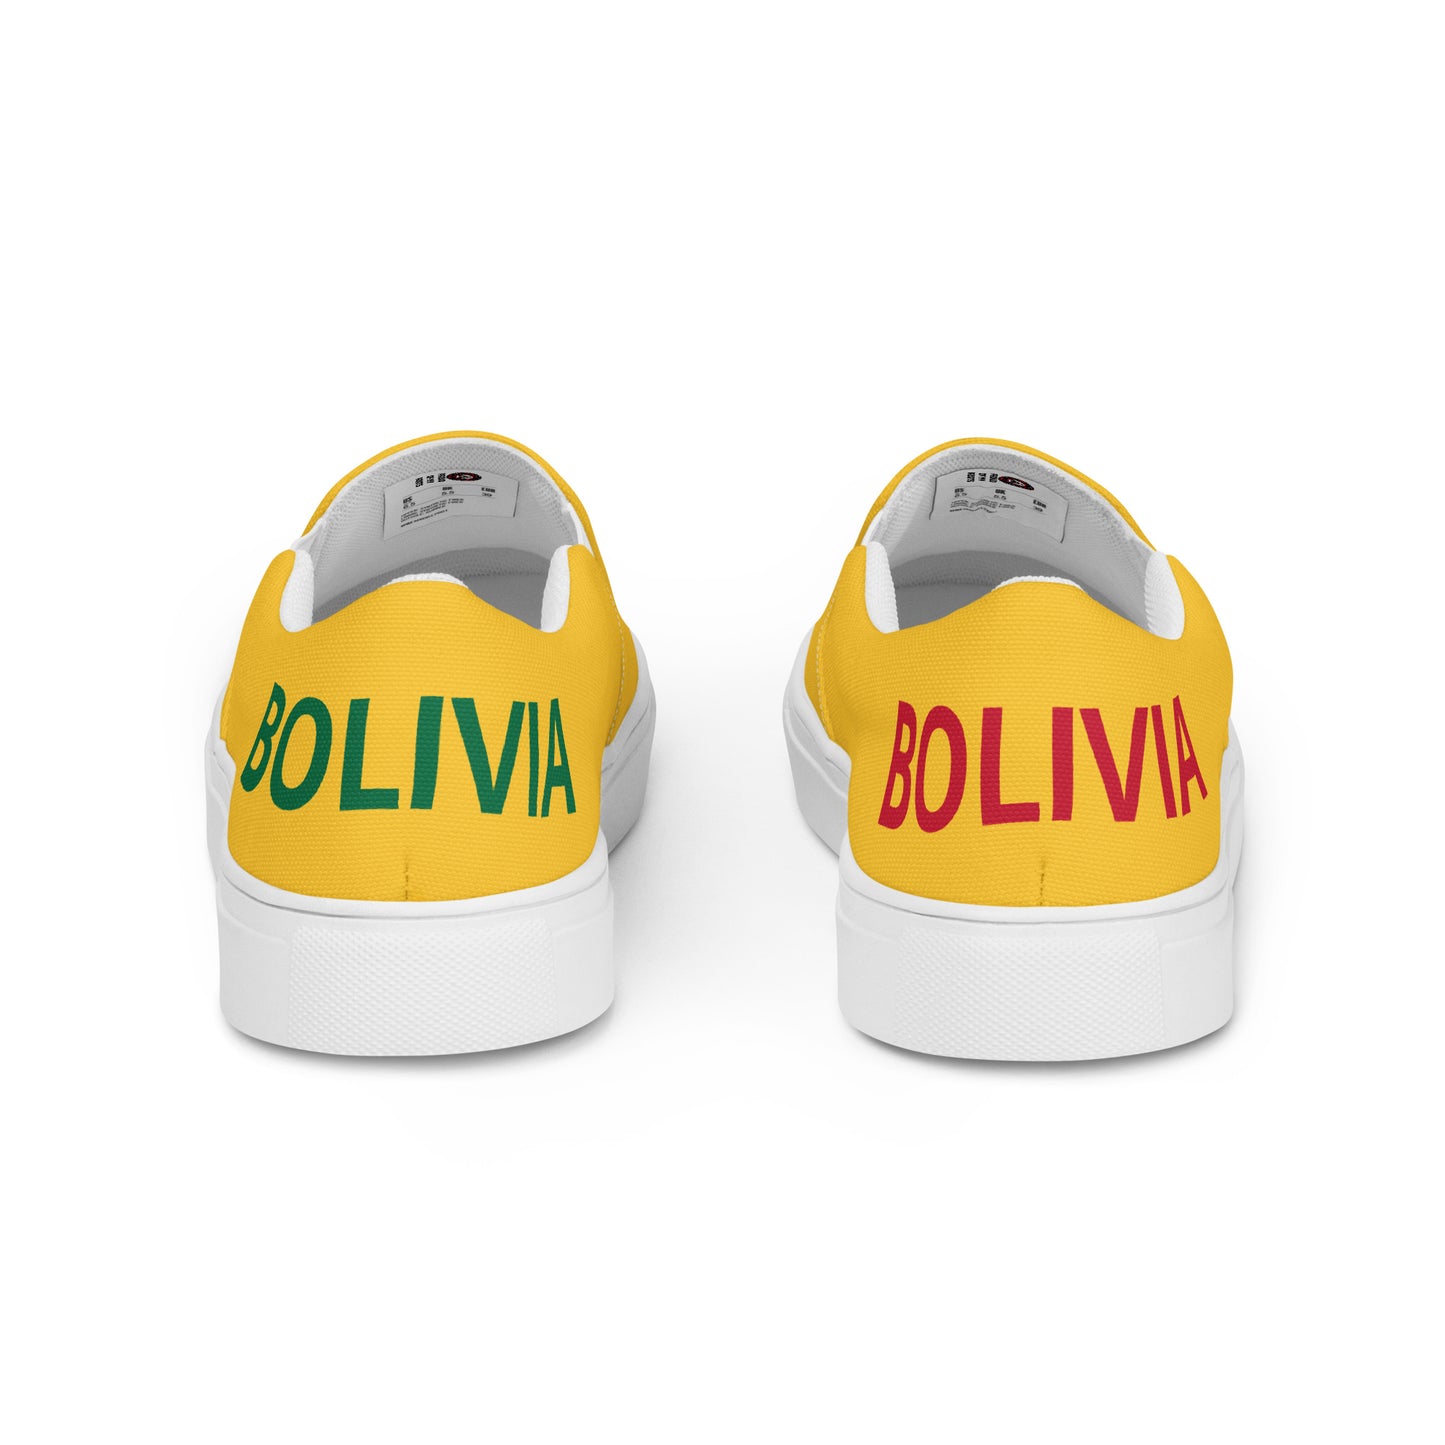 Bolivia - Men - Yellow - Slip-on shoes